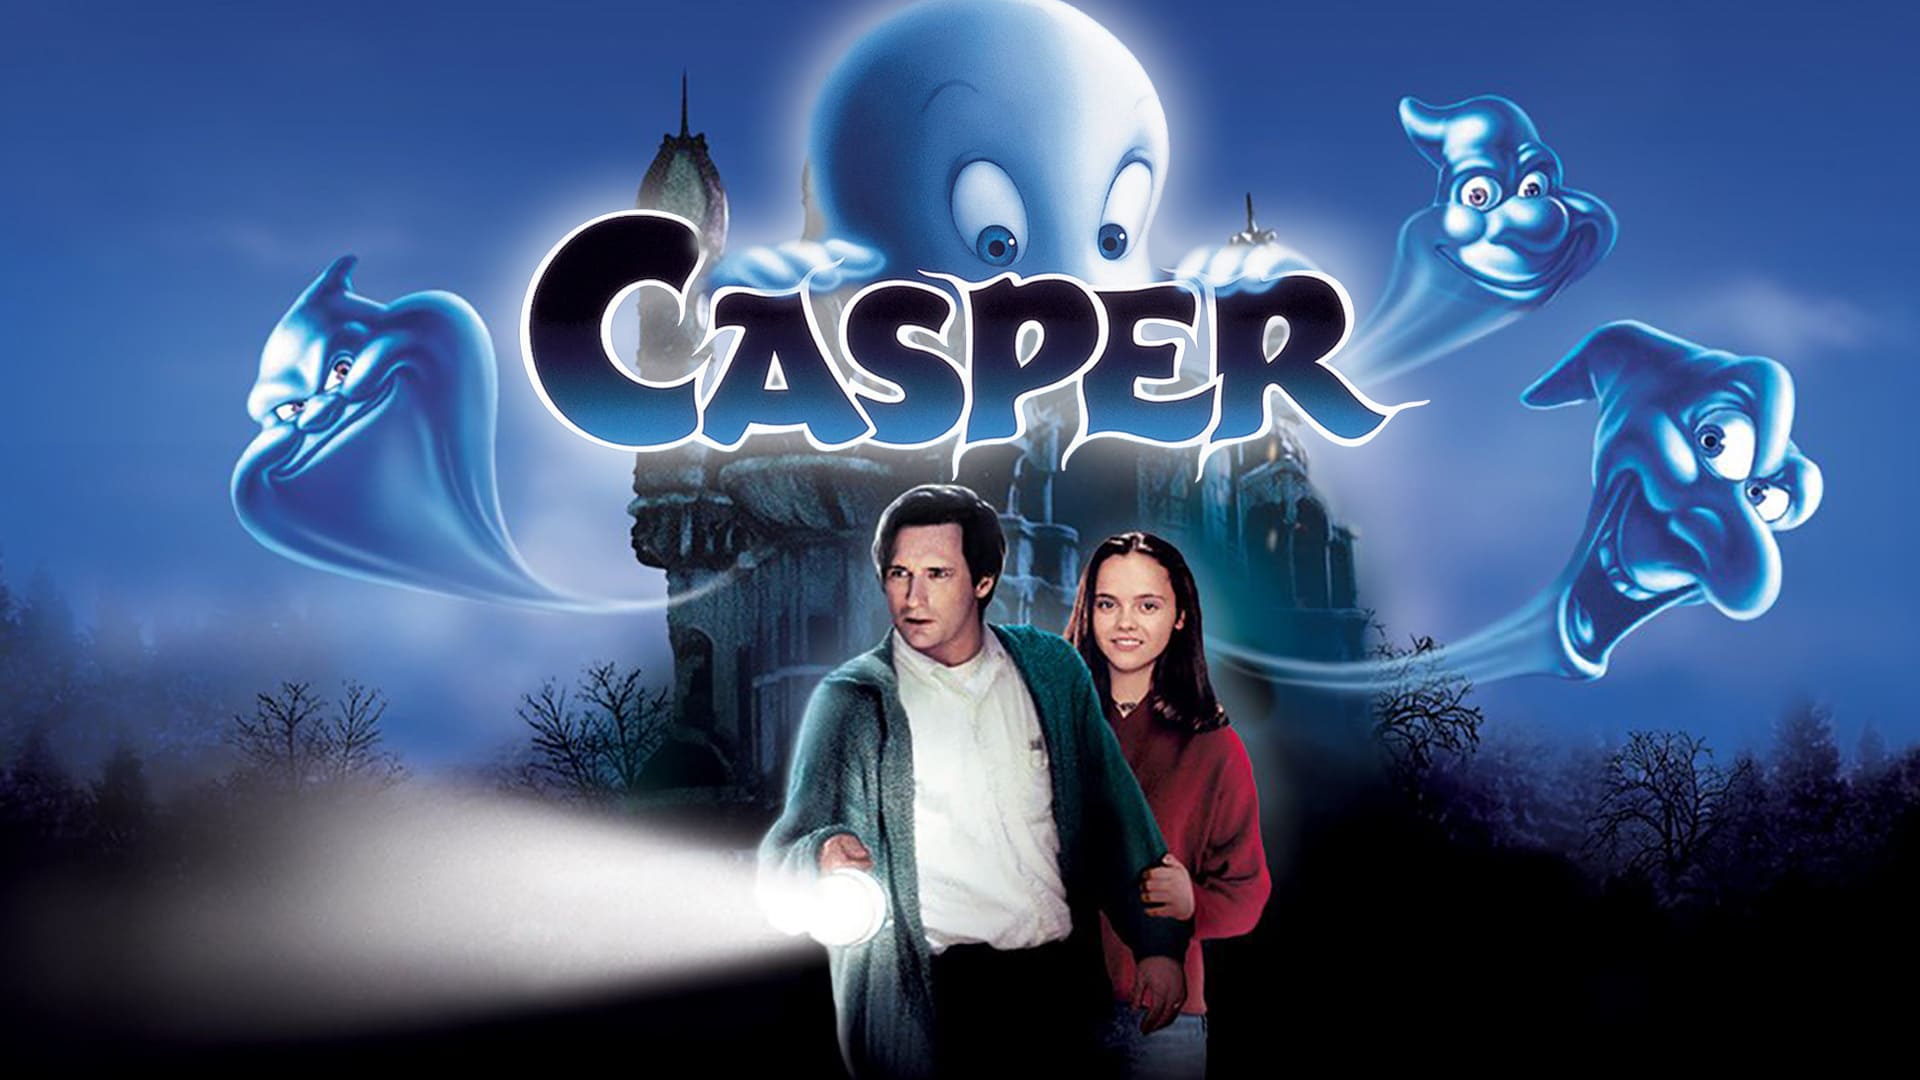 Casper The Friendly Ghost Wallpaper - Resolution:1920x1080 - ID:1171074 ...